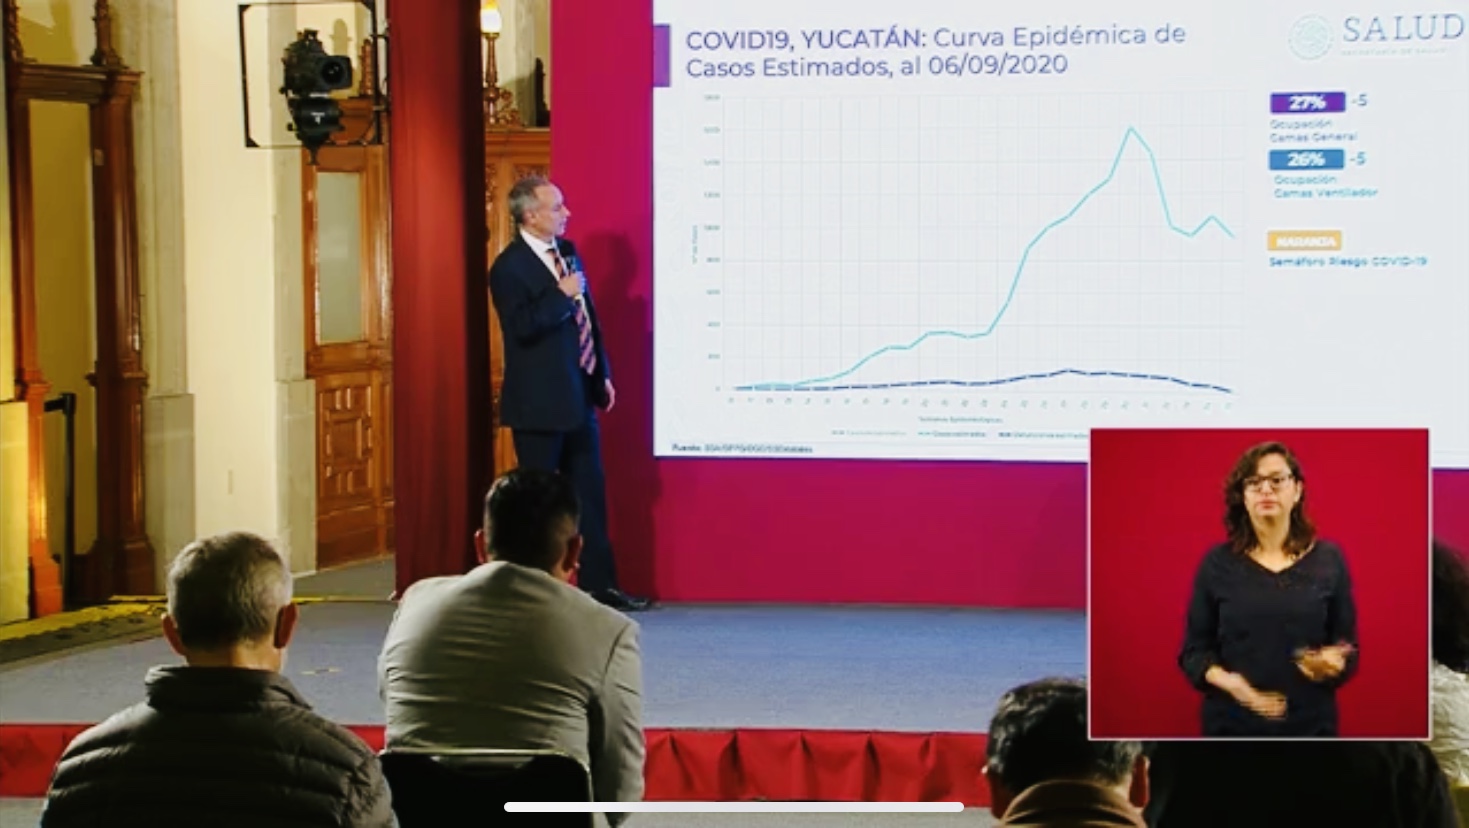 Photo of La curva epidémica de Covid-19 en Yucatán va disminuyendo: López-Gatell